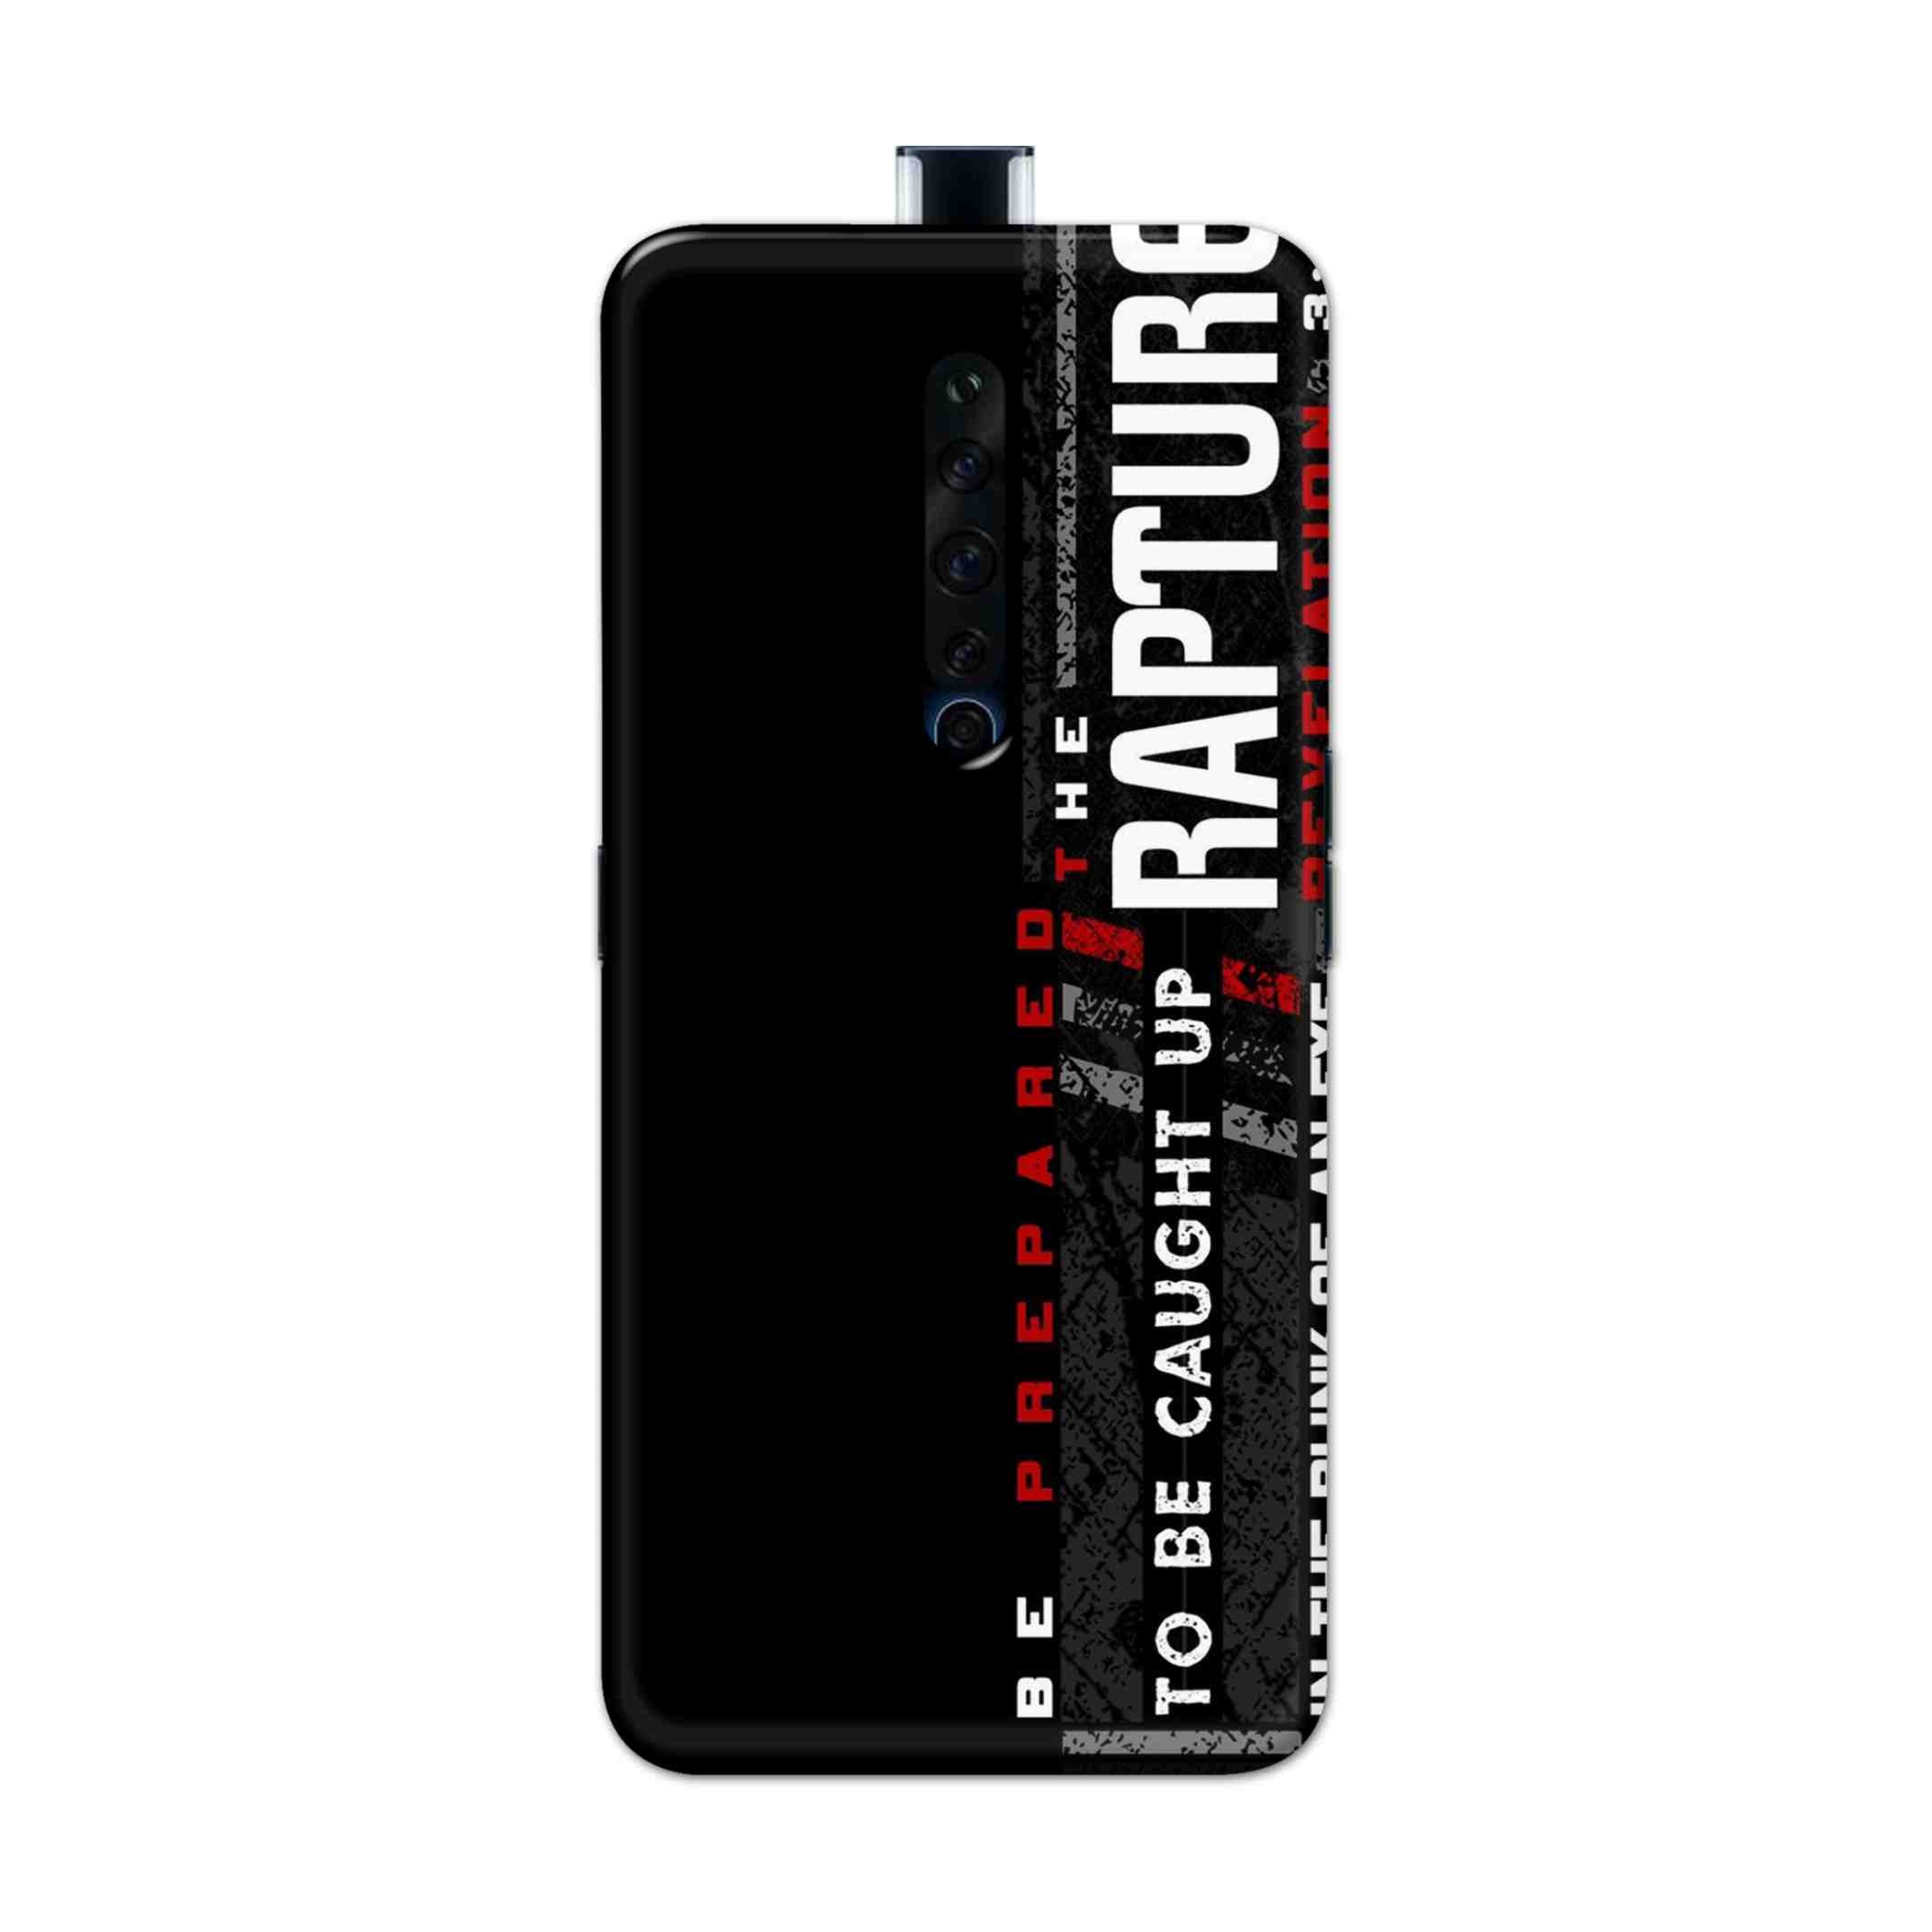 Buy Rapture Hard Back Mobile Phone Case Cover For Oppo Reno 2Z Online